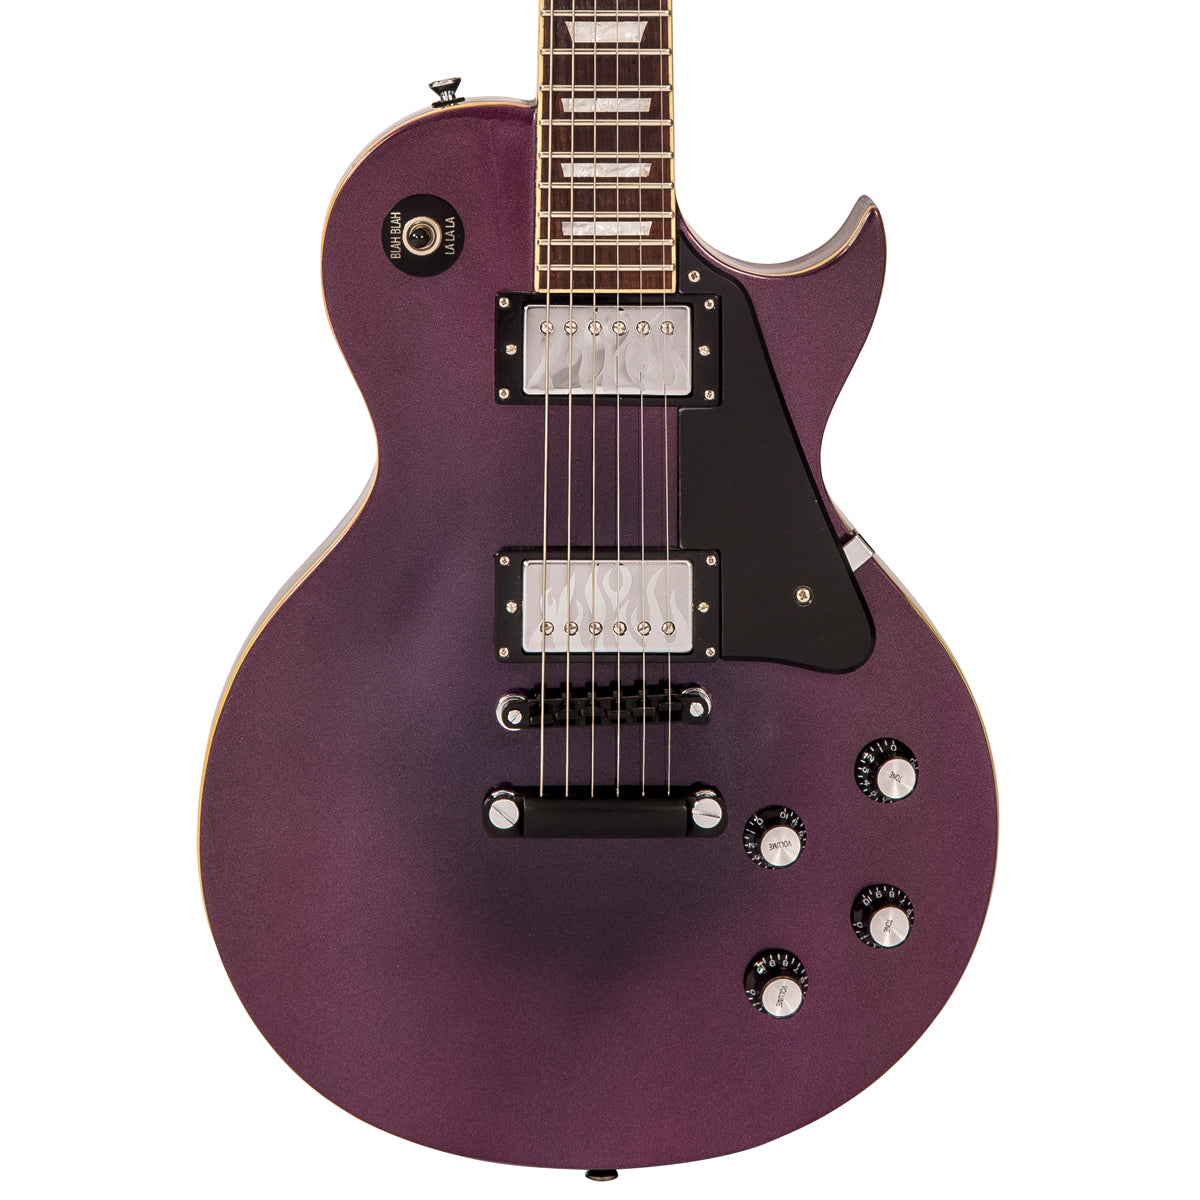 SOLD - Vintage V100 ProShop Unique ~ Metallic Purple, Electric Guitars for sale at Richards Guitars.